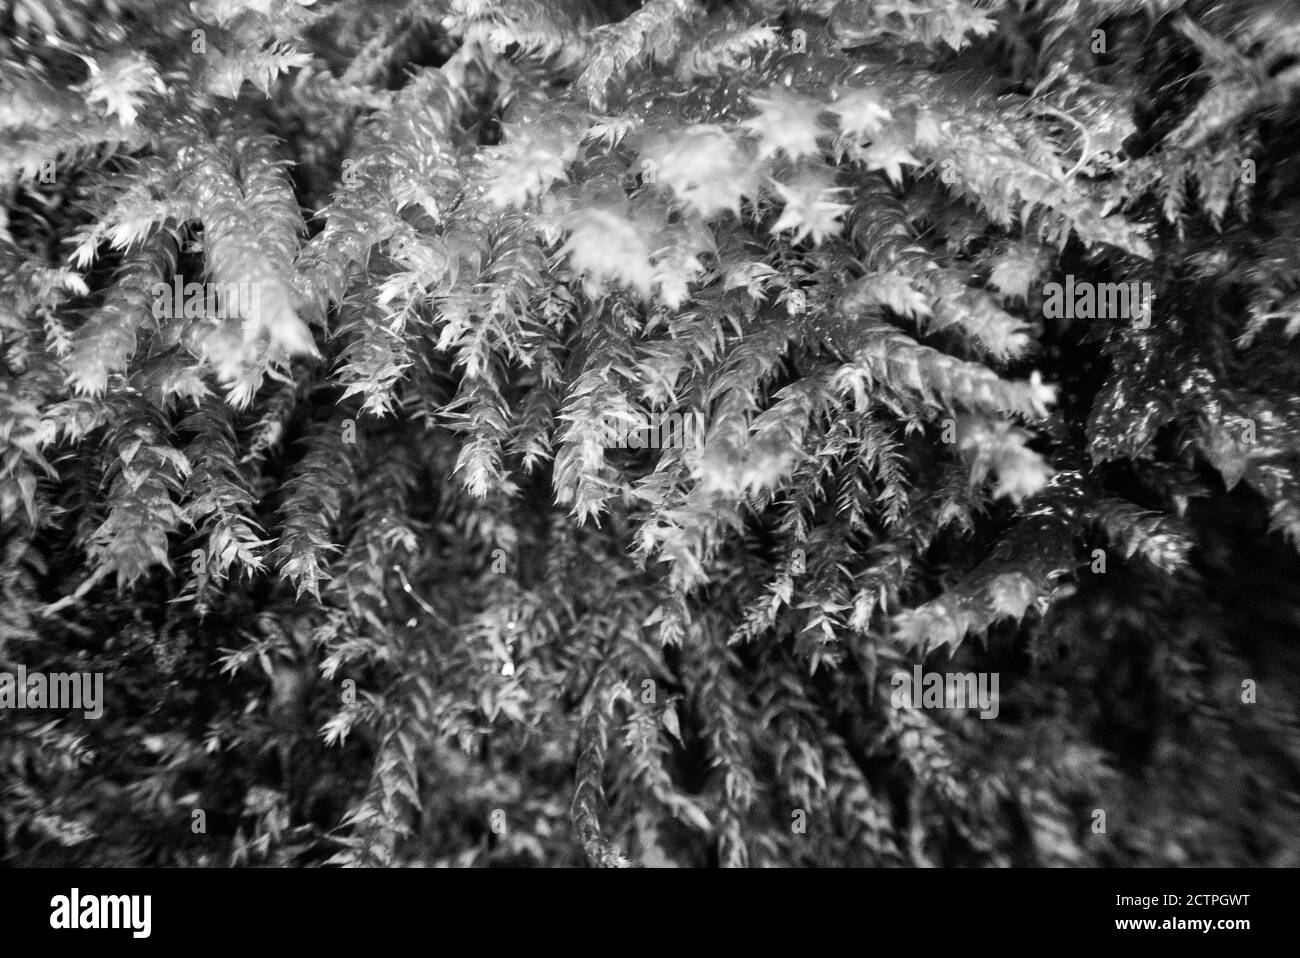 Grayscale shot of Anomodon attenuatus plant Stock Photo